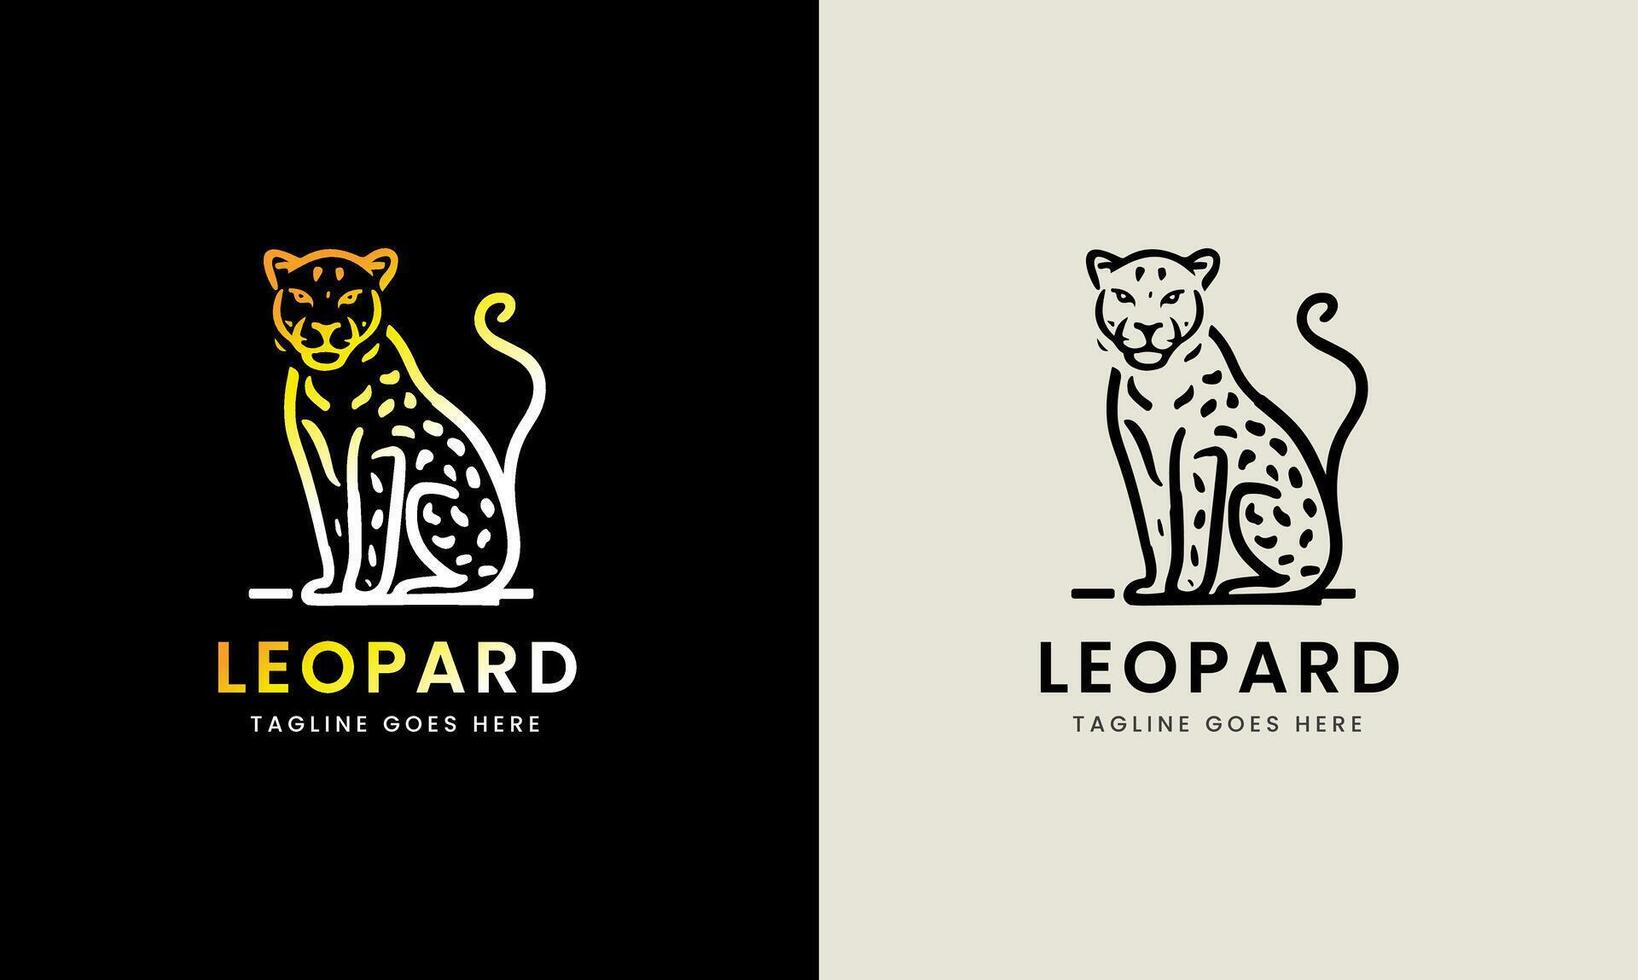 leopardo icono símbolo Puma, jaguar cabeza, gato Tigre animal logo modelo imagen ilustración vector